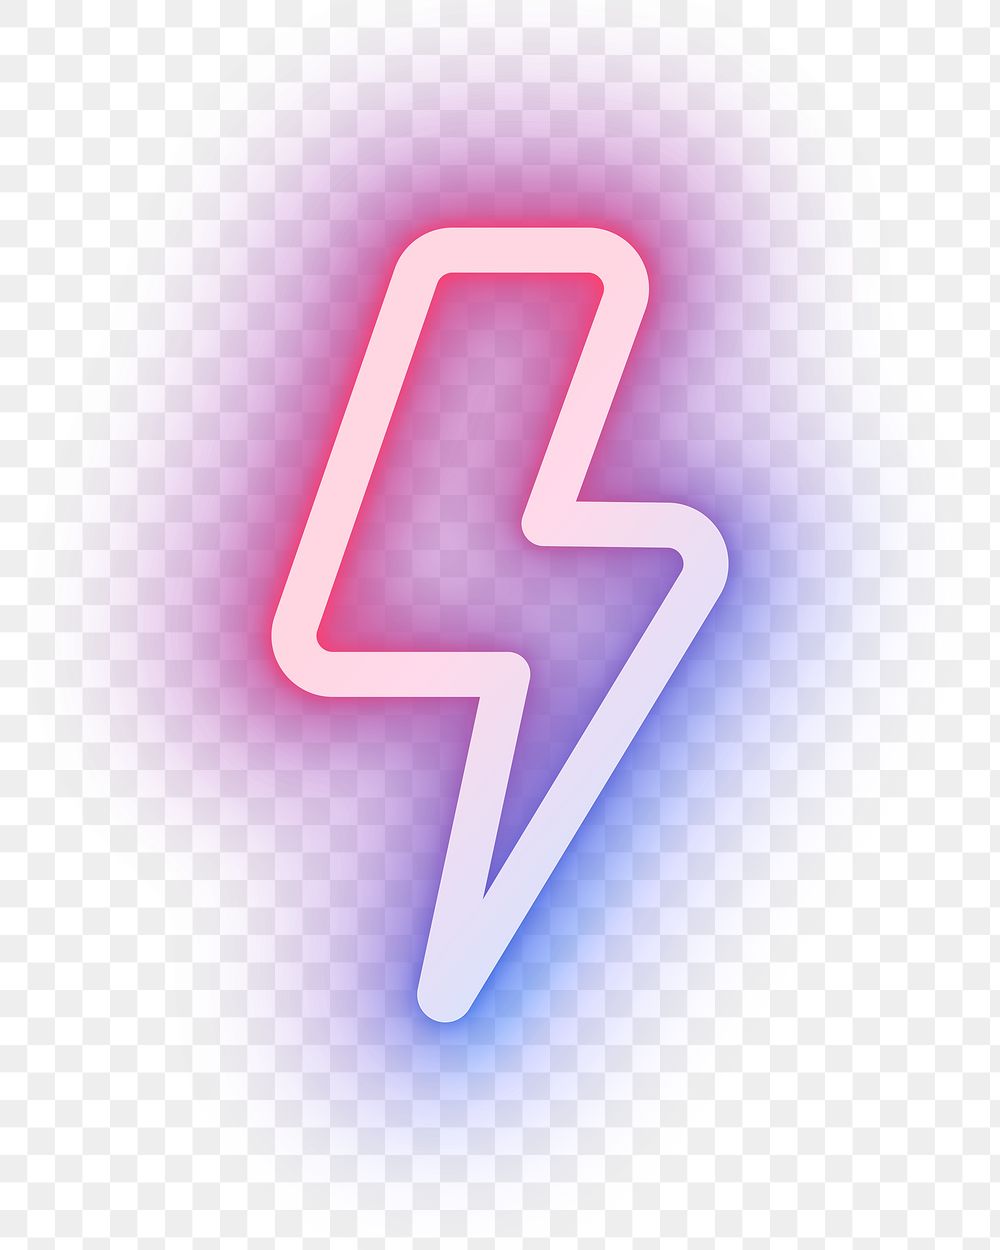 Neon Lightning Bolt Image Wallpaper